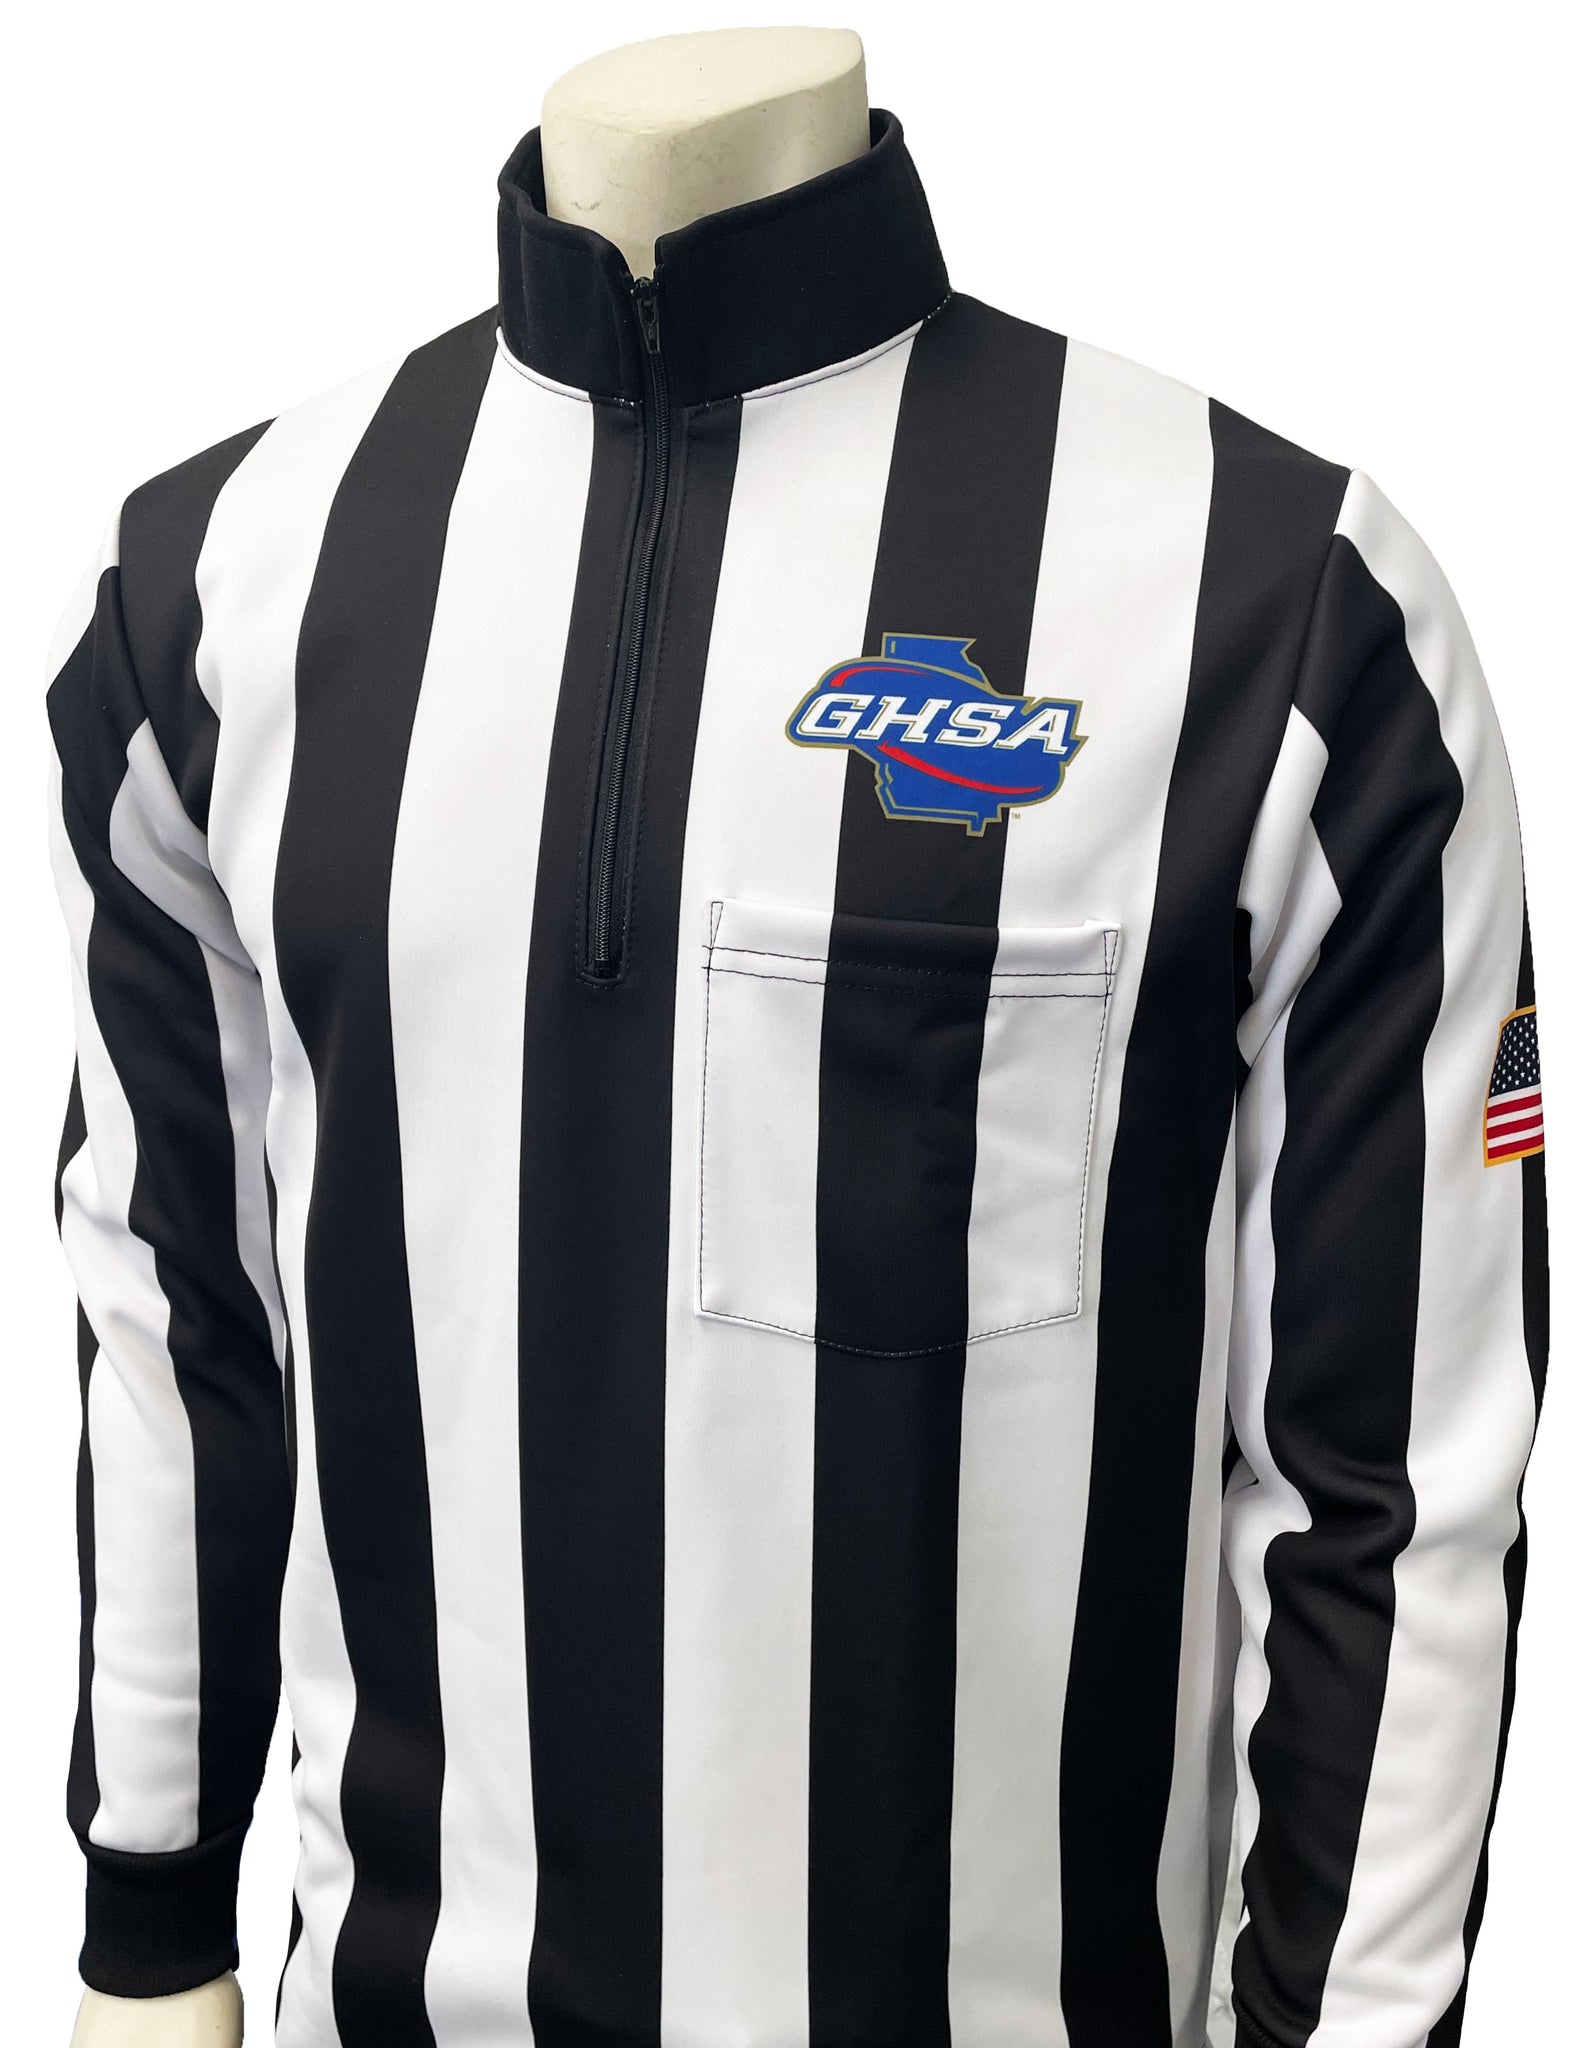 USA730GA - Smitty "Made in USA" - Dye Sub Georgia Football Cold Weather Long Sleeve Shirt